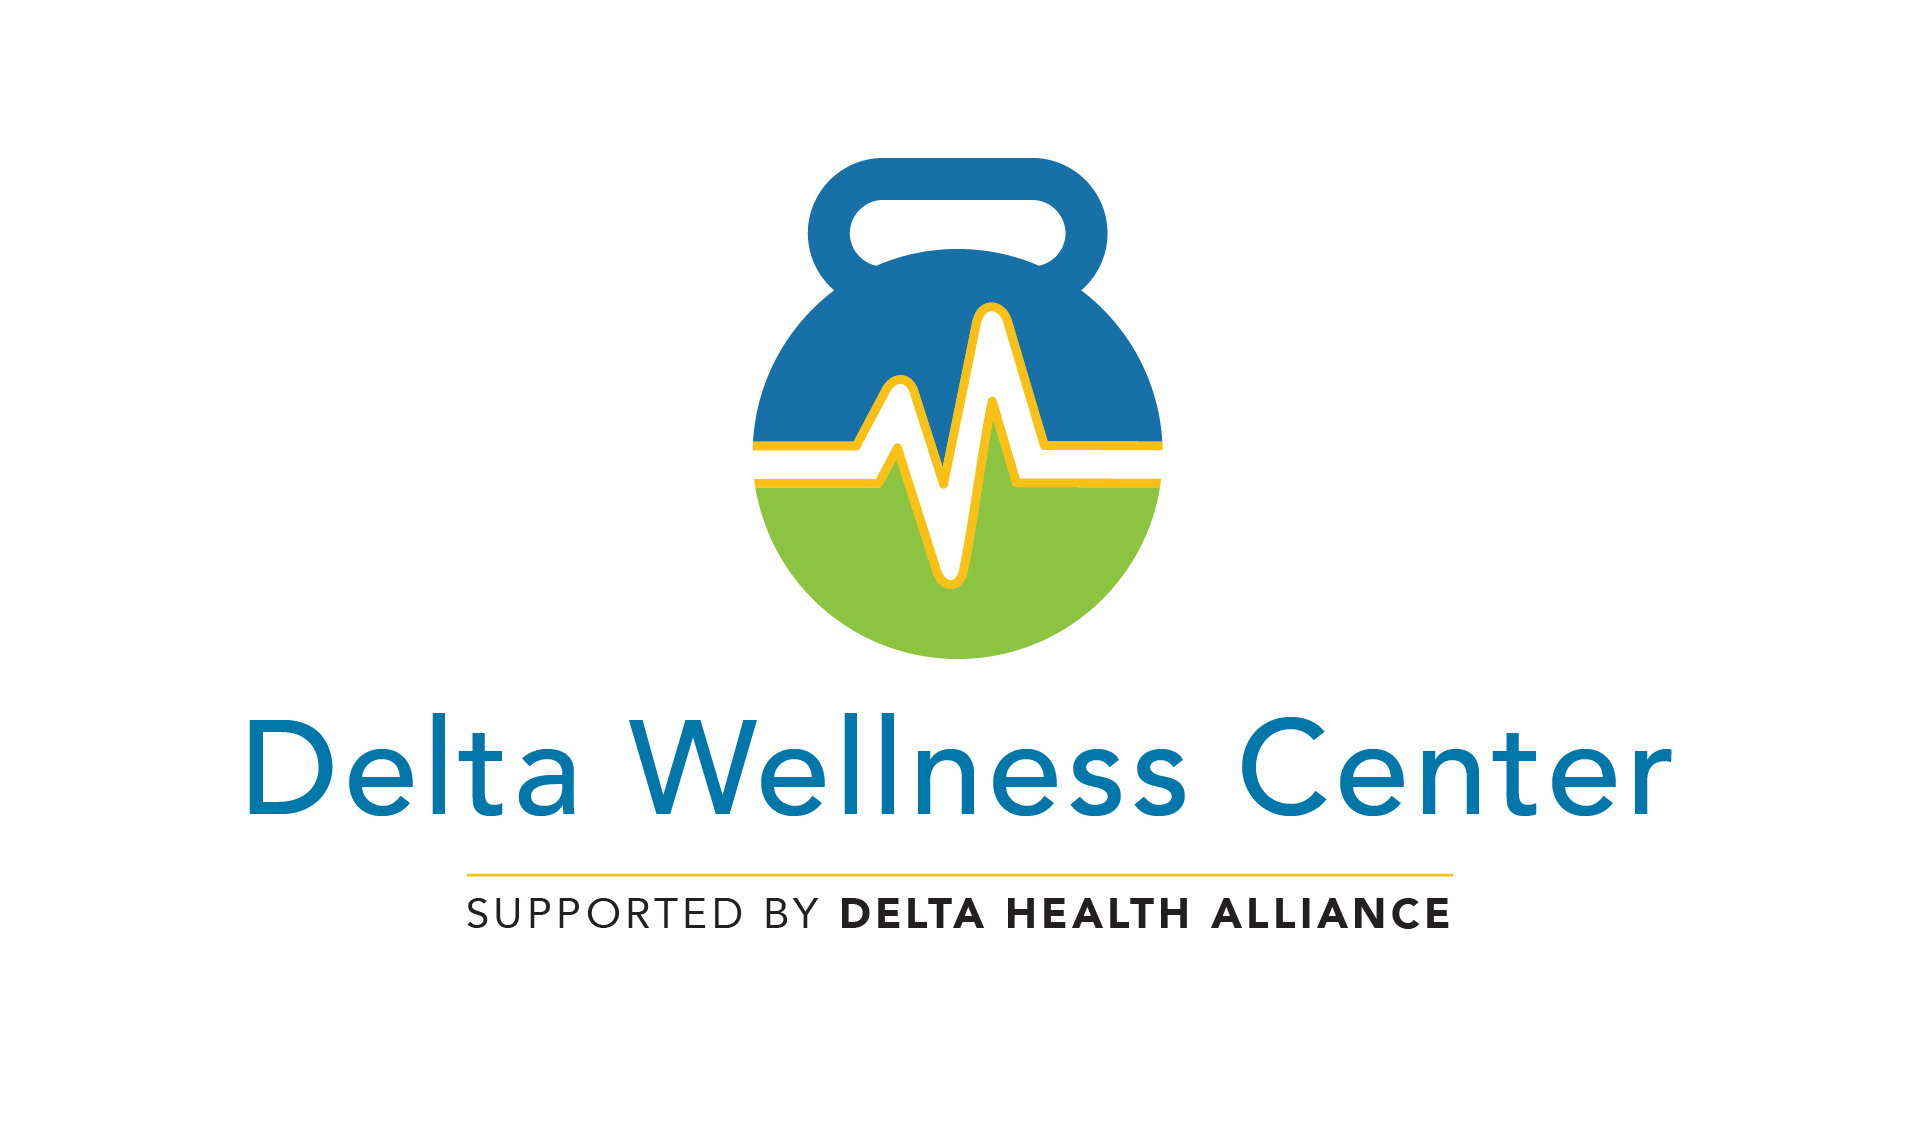 Delta Wellness Center logo